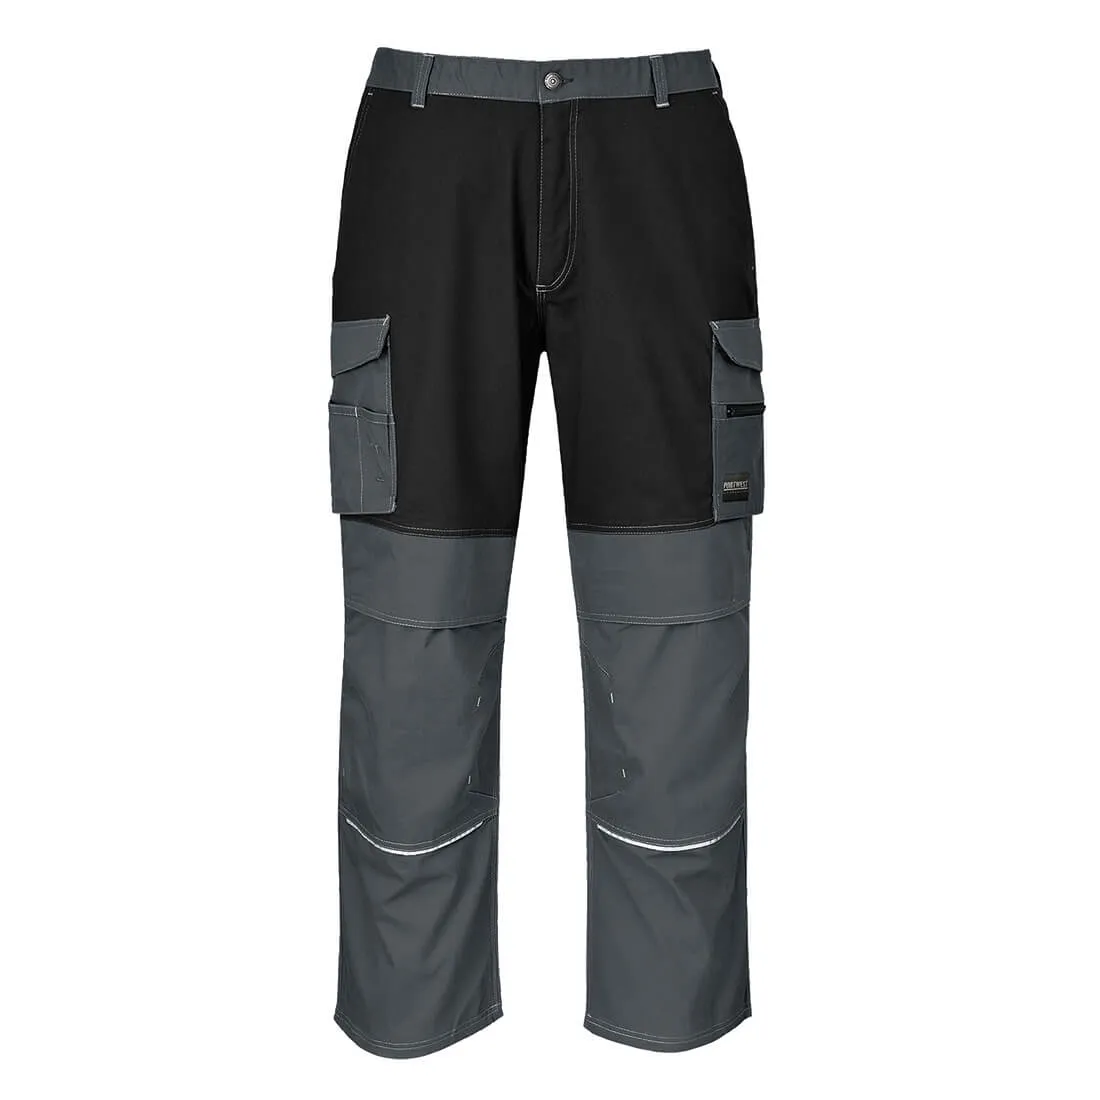 Portwest KS13 Granite Trousers - Grey / Black, 3XL, 31"